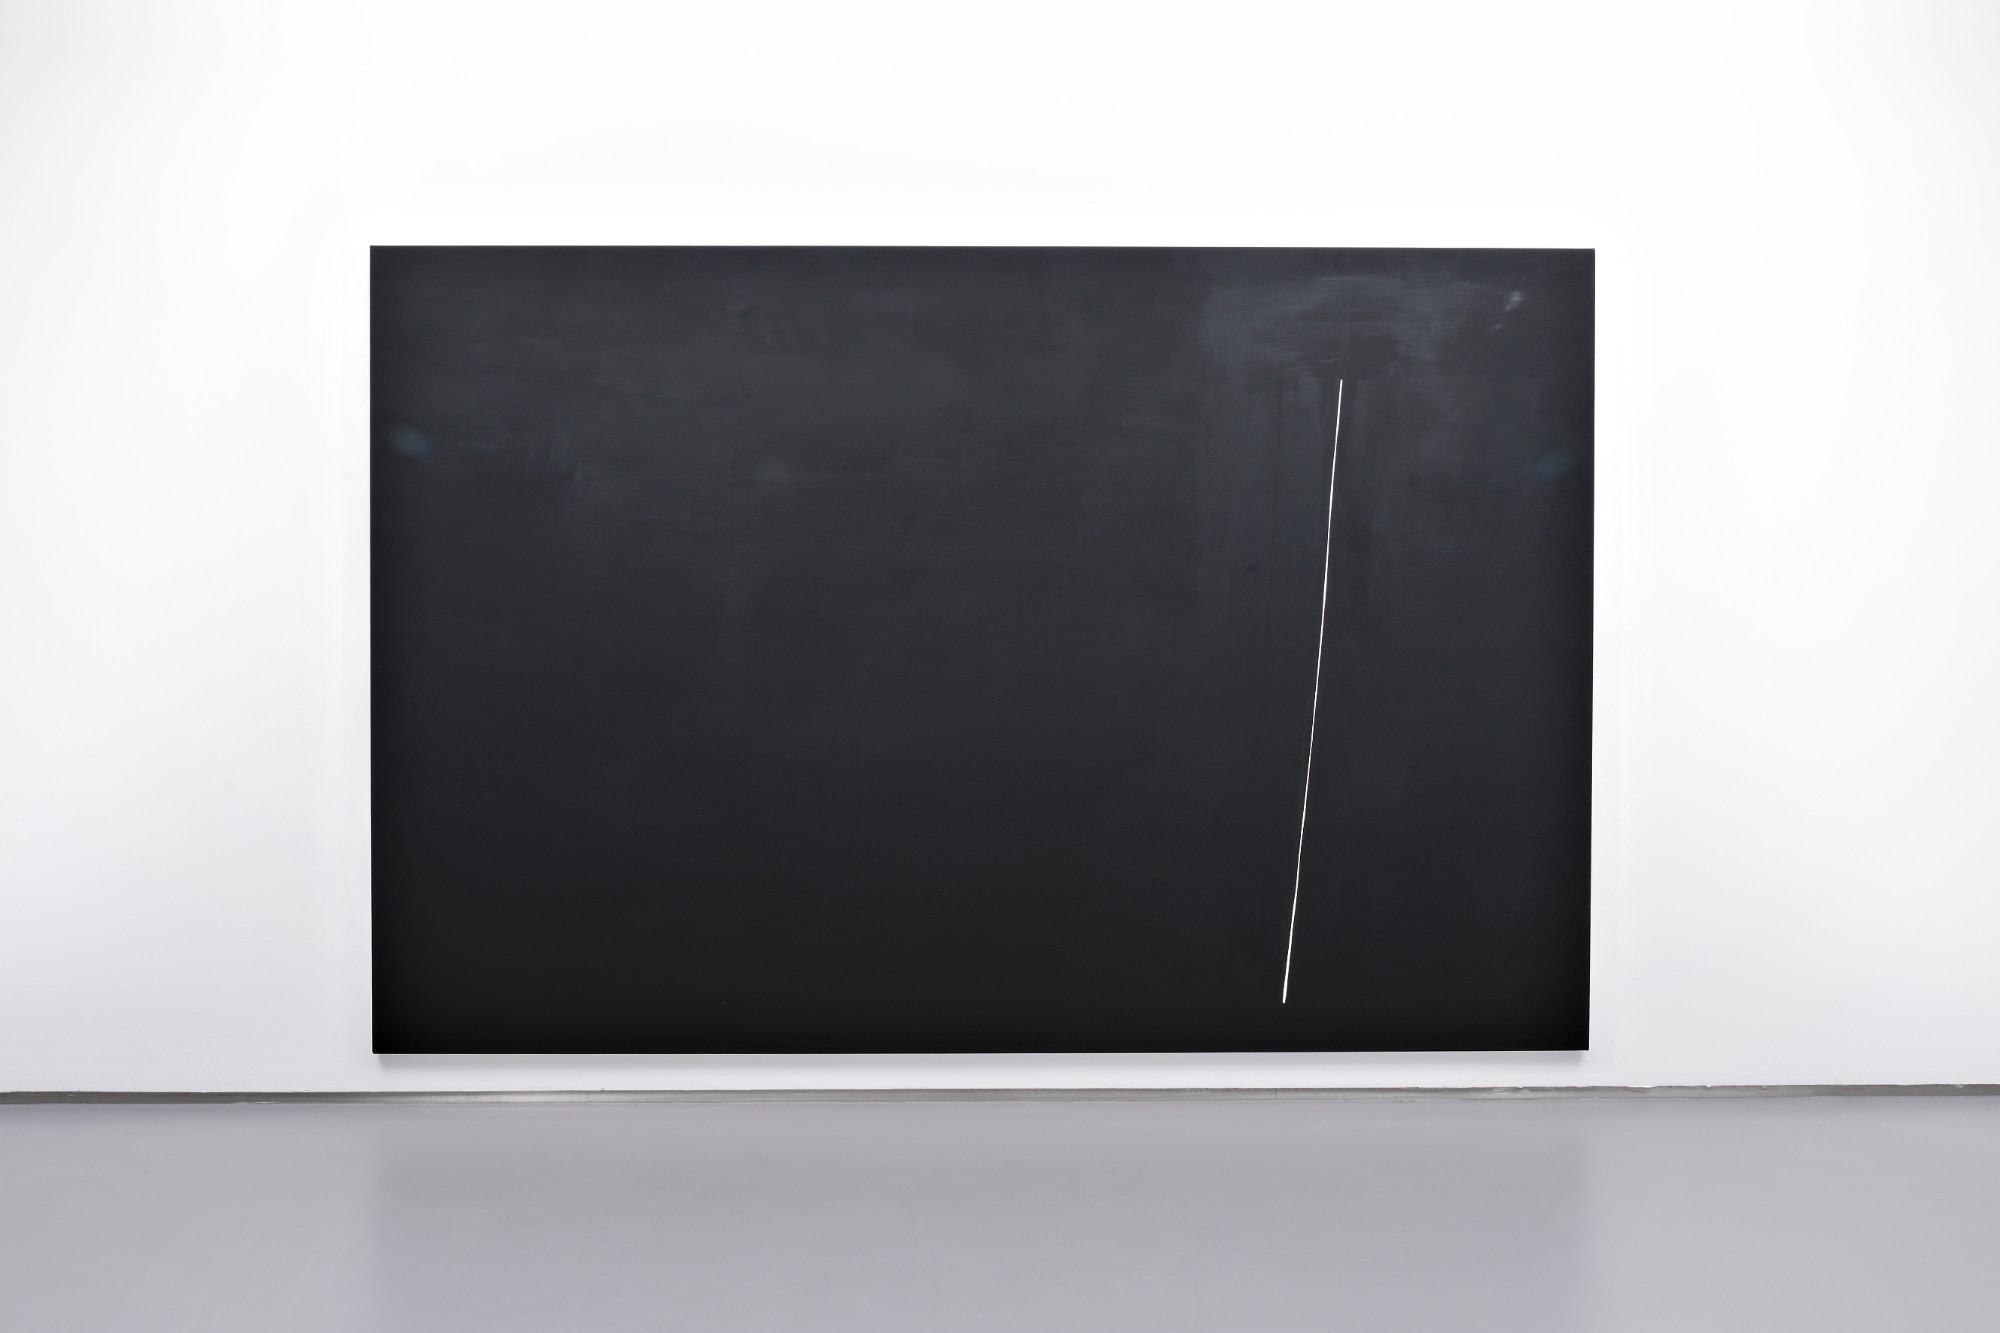 André Butzer, Untitled, 2016, oil on canvas, 200 x 300 cm